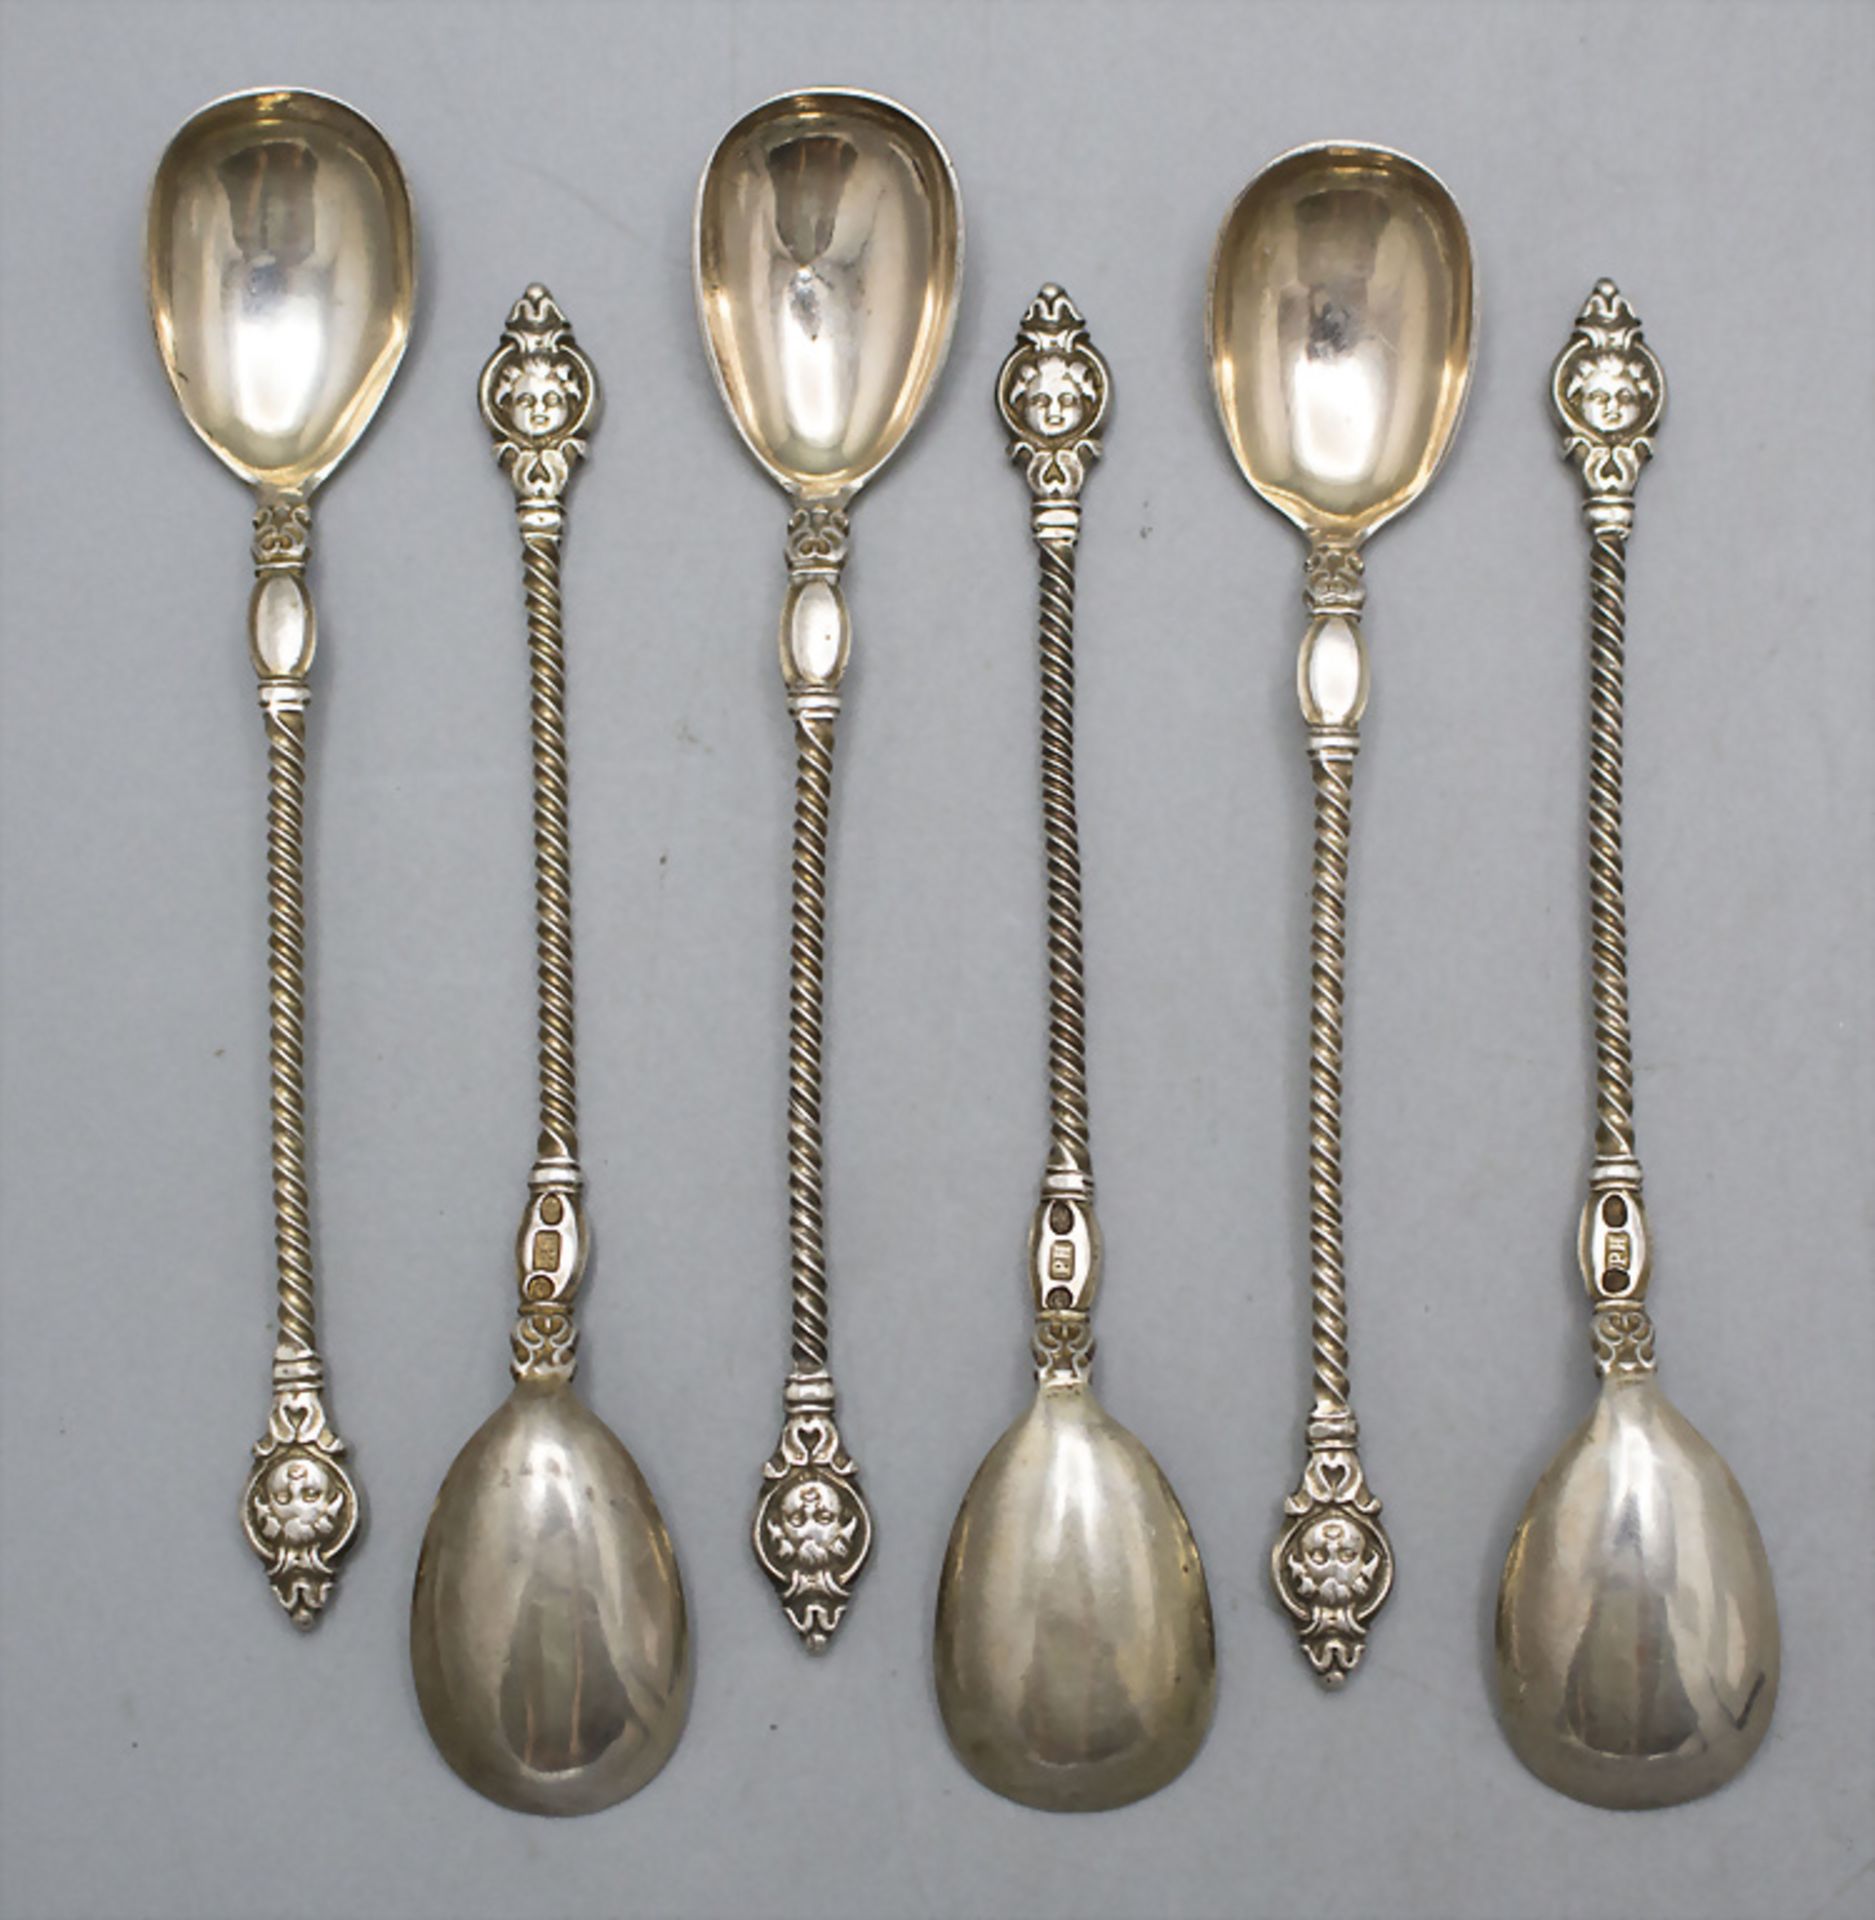 6 Löffel mit Putto-Kopf / 6 silver spoons with cherub head, Simon Groth/P. Hertz, Dänemark, 1870